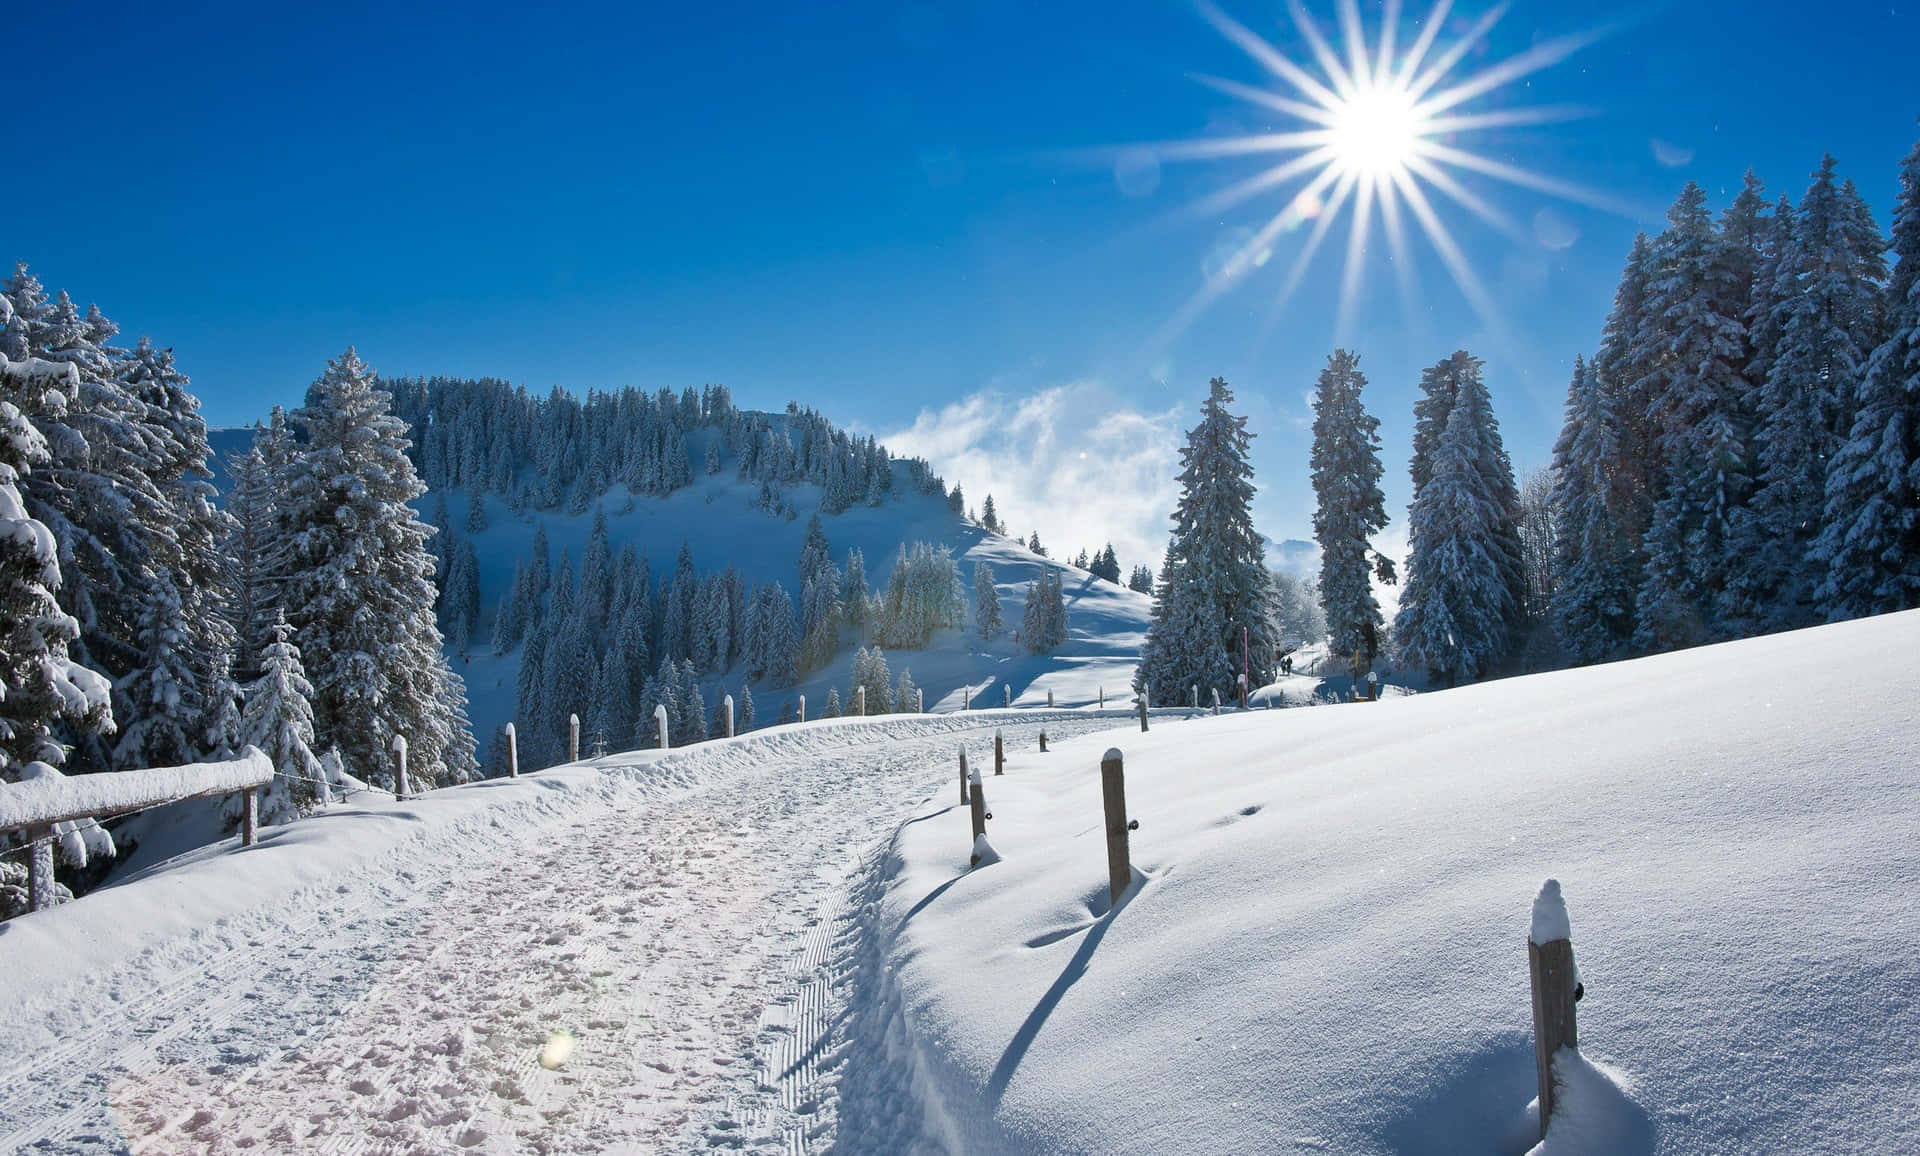 Snow-covered Path Winter Scenery Desktop Wallpaper